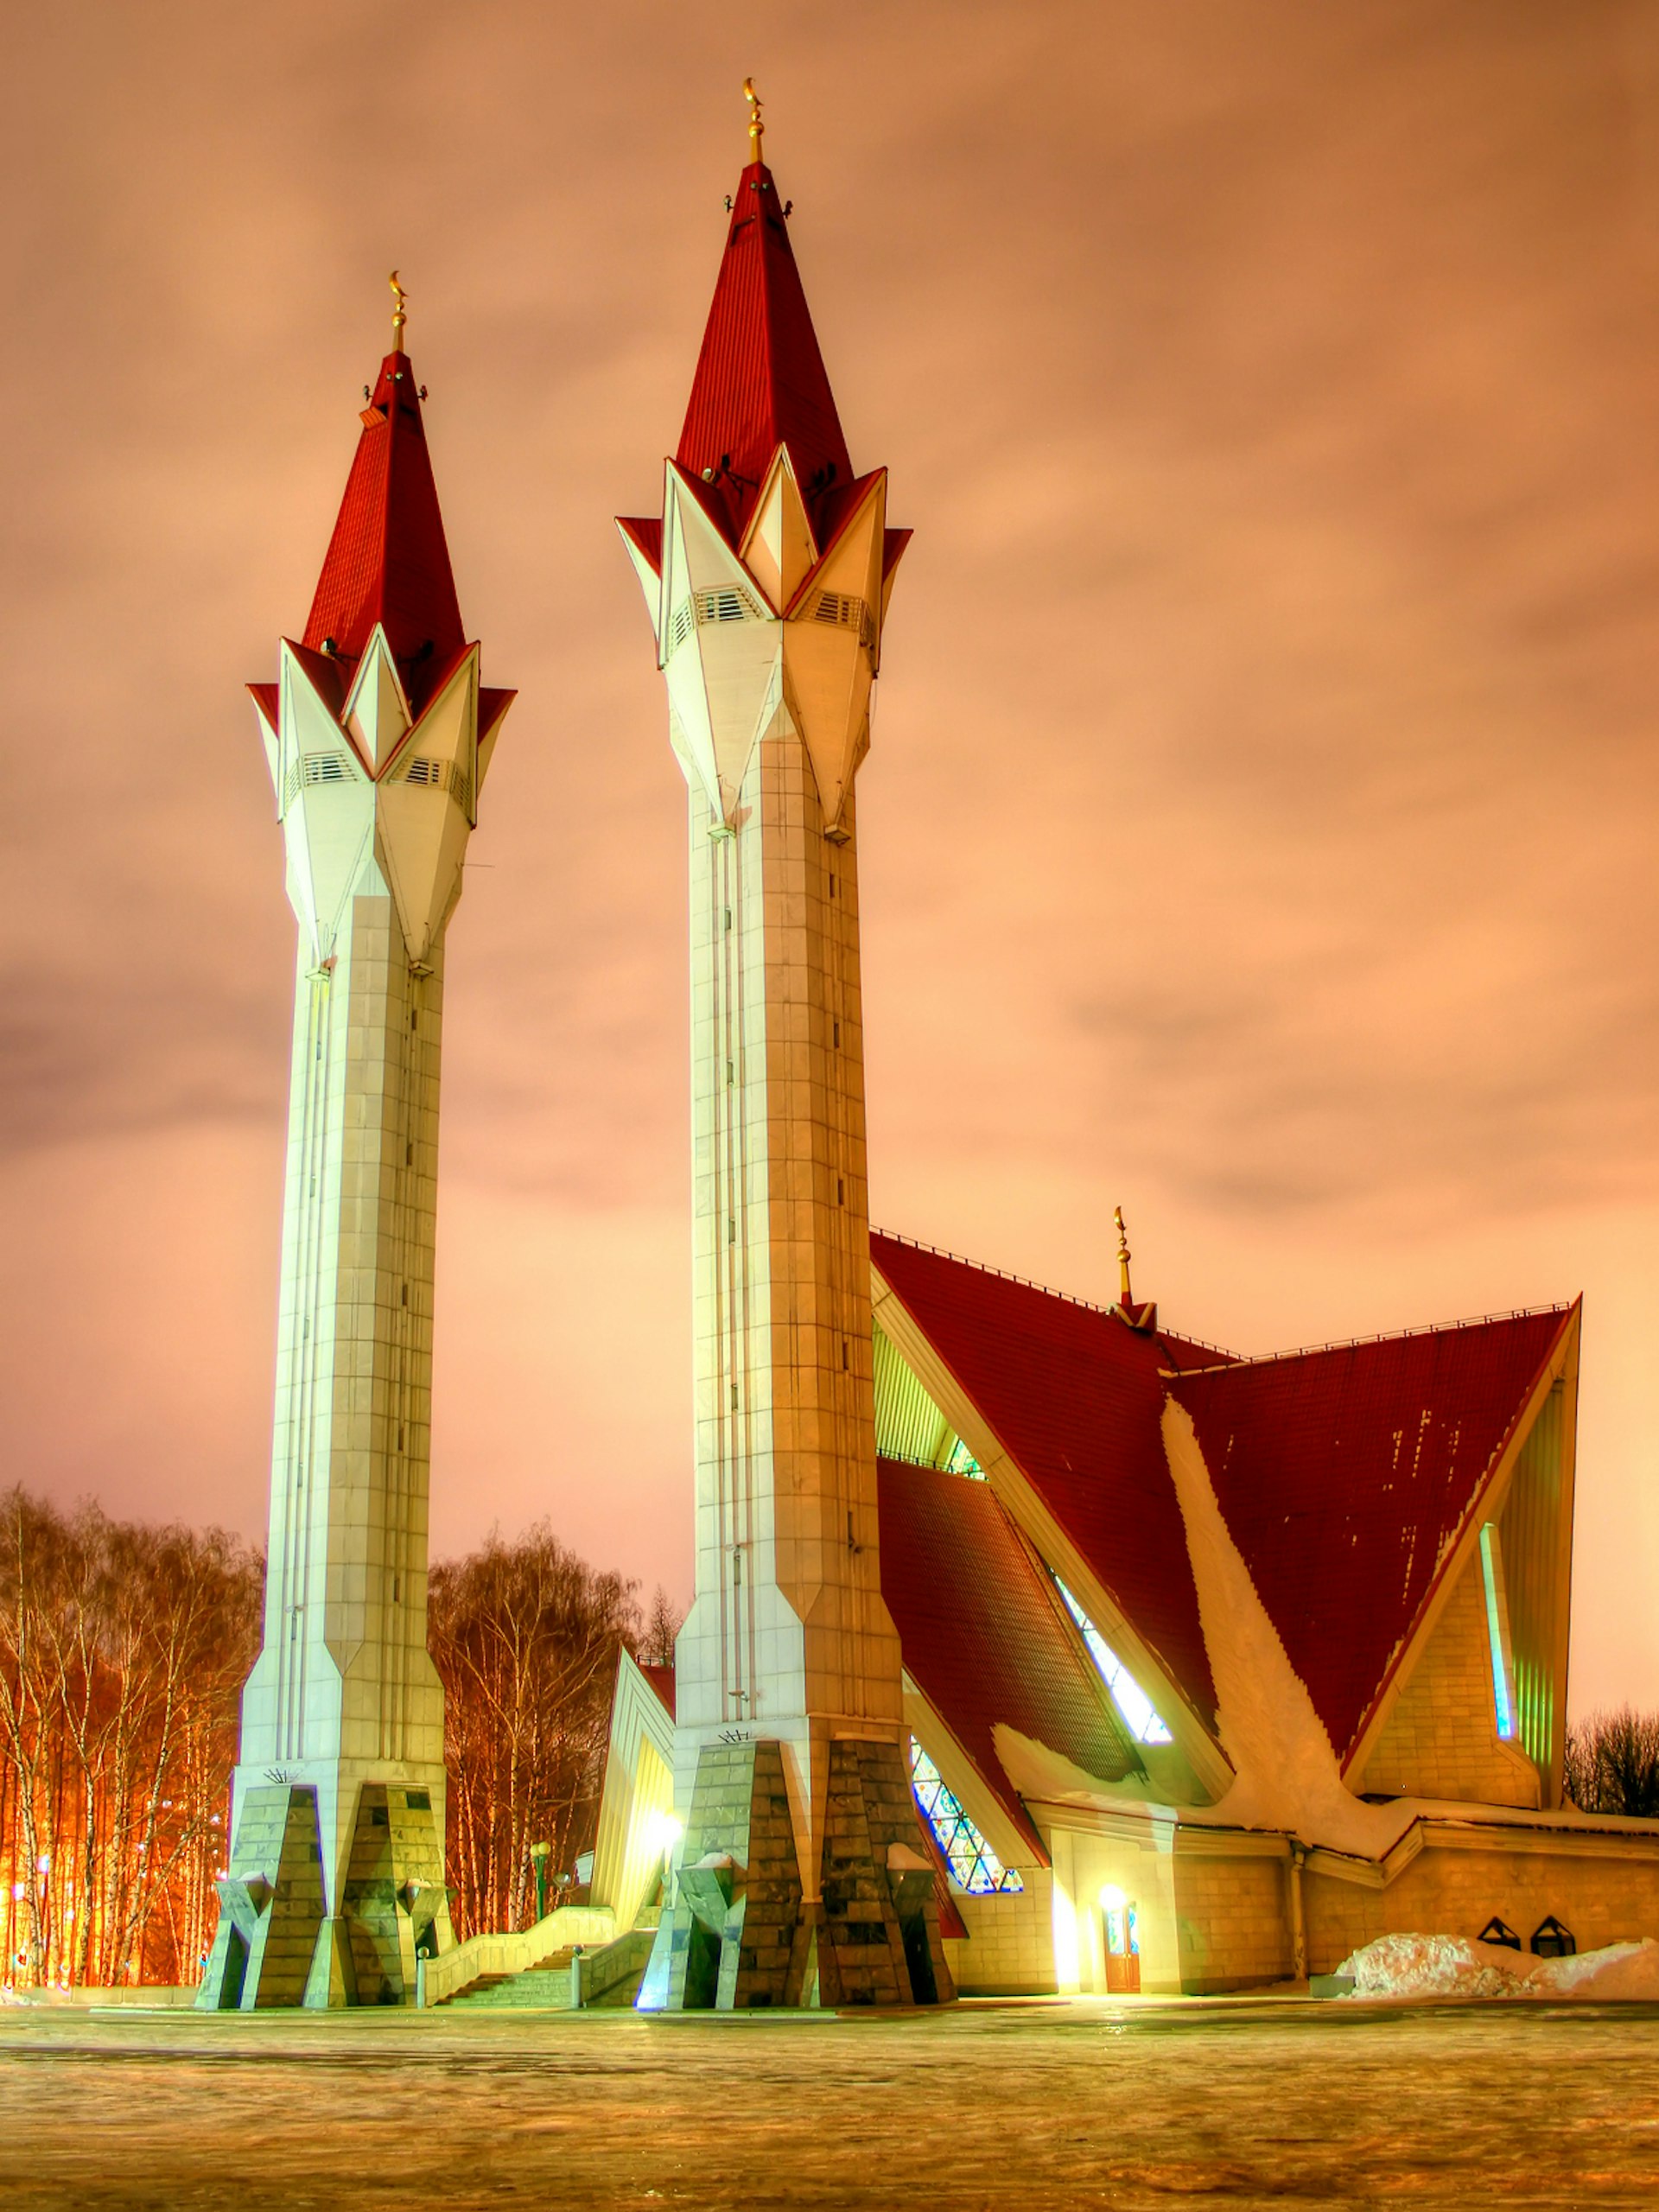 Tulip-styled minarets of the Lala Tyulpan Mosque in Ufa, the capital of Bashkortostan © Art Konovalov / Shutterstock